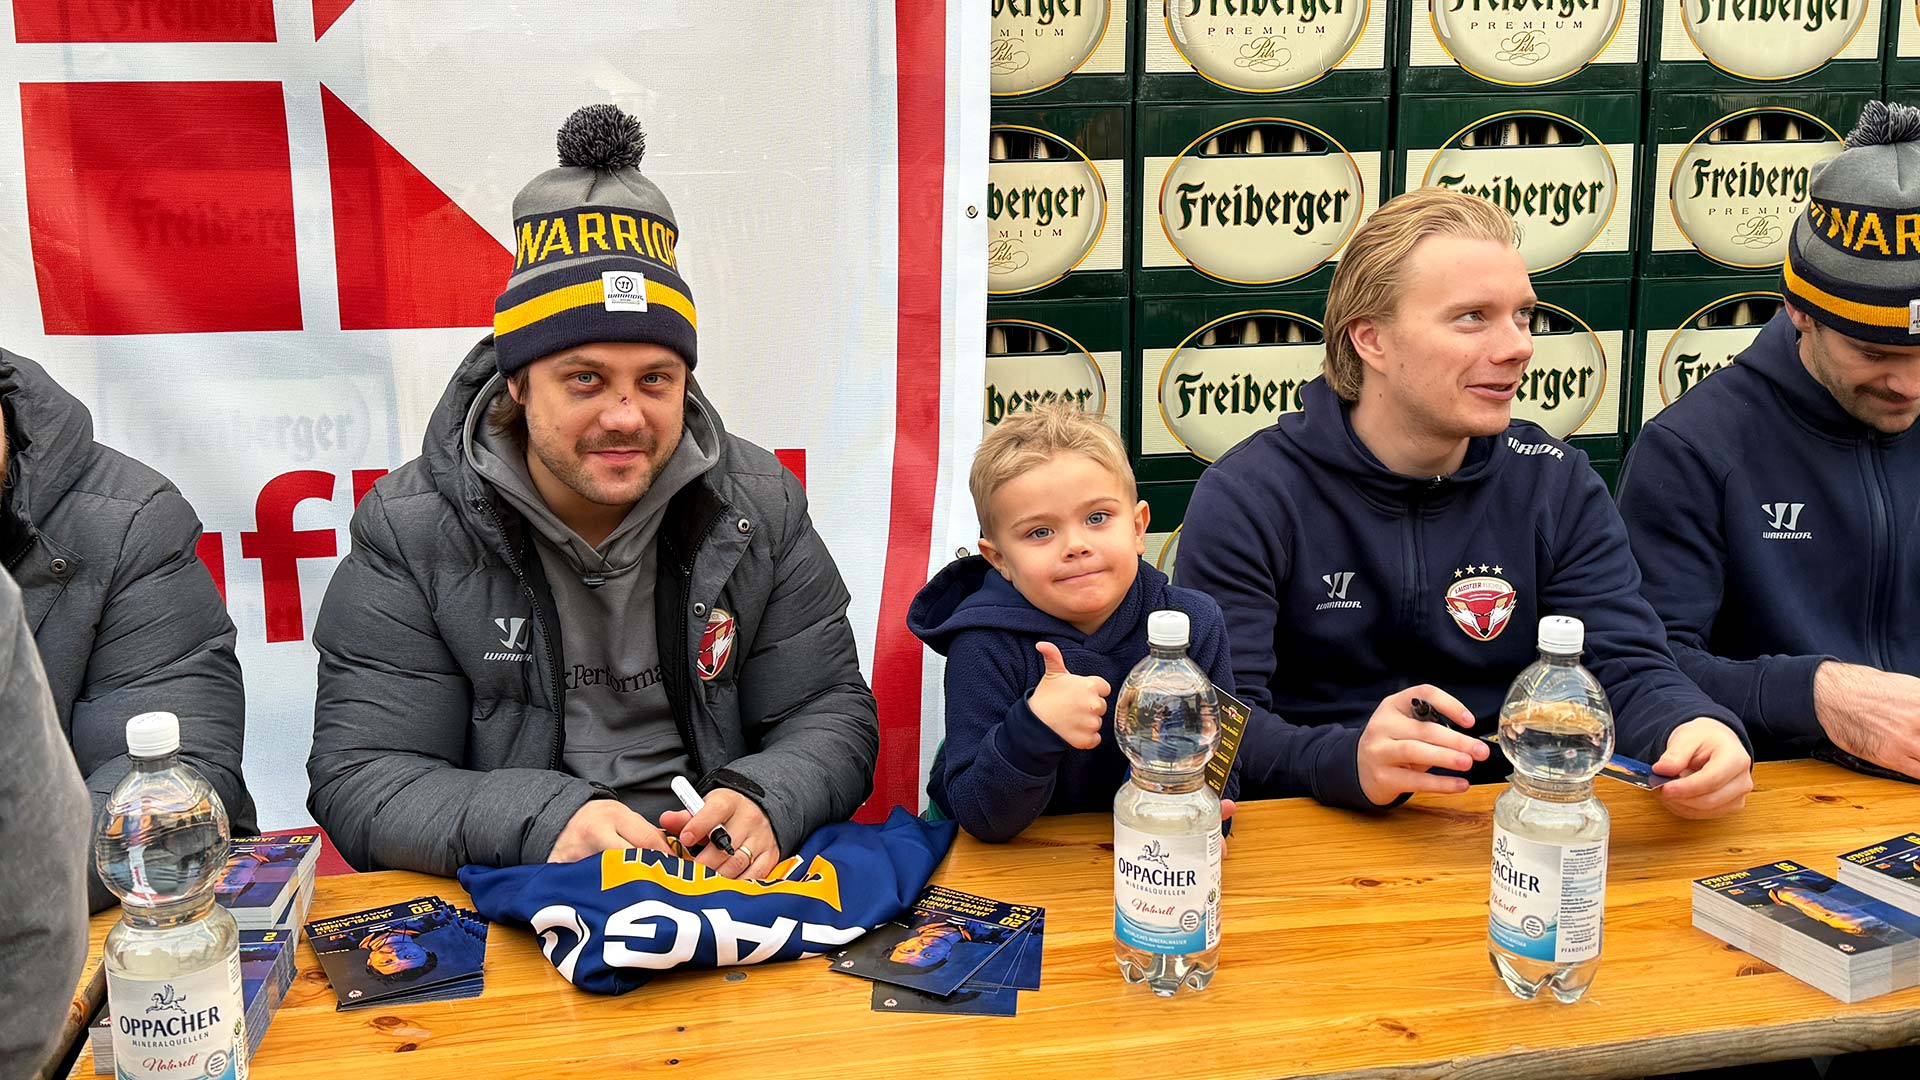 Ville Järveläinen mit Sohn bei der Autogrammstunde